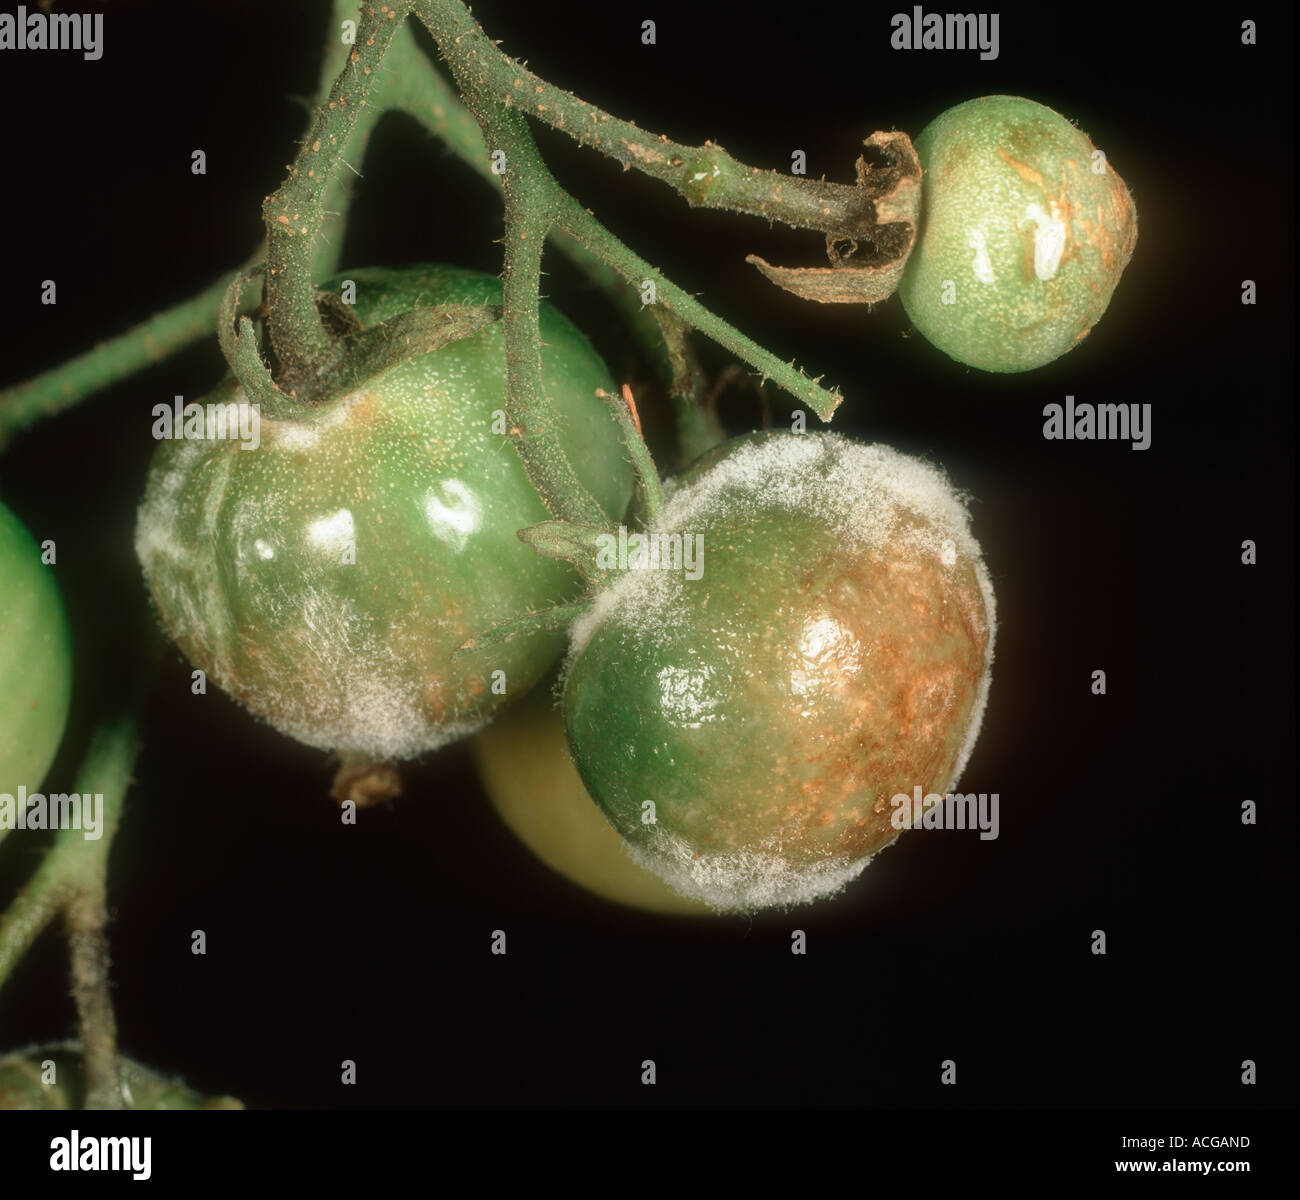 Tomato late blight Phytophthora infestans sporulating on immature tomato fruit Stock Photo